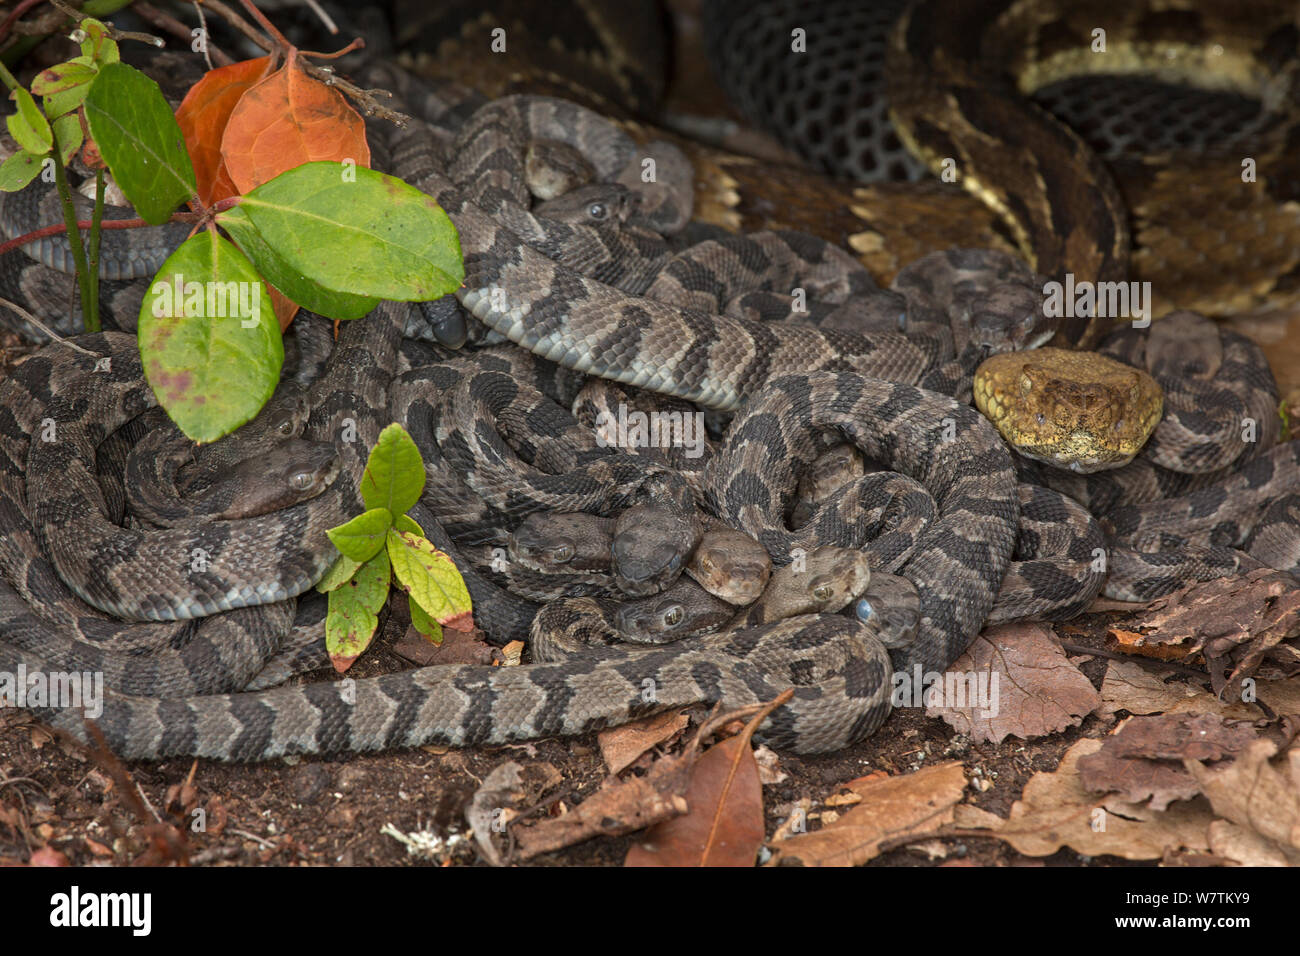 Timber rattlesnakes (Crotalus horridus) adult females and newborn young, Pennsylvania, USA, September. Stock Photo